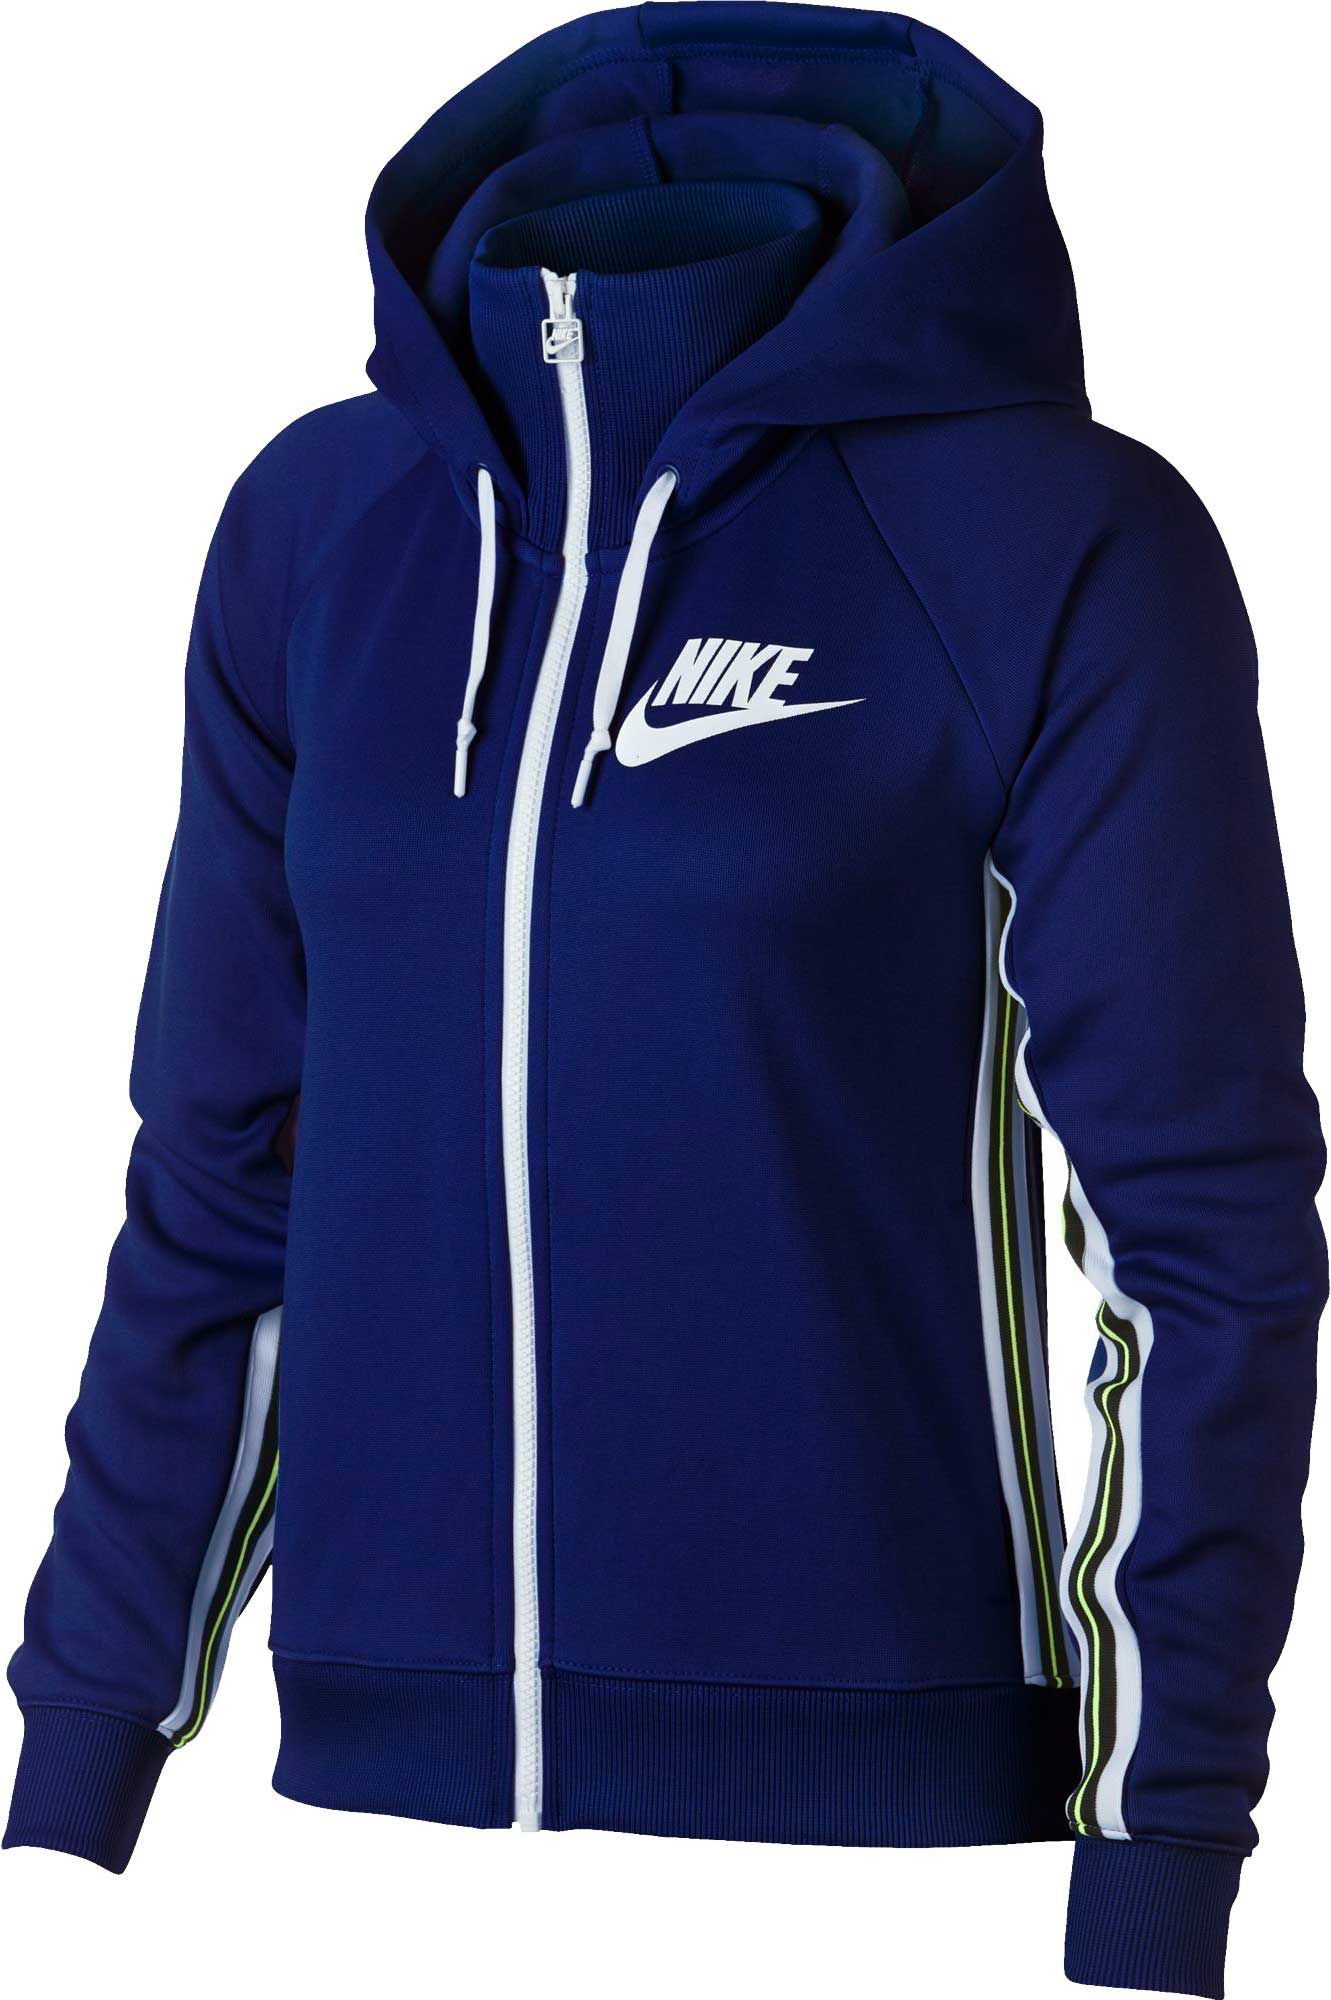 Women's Hoodies & Sweatshirts: Nike & More | Best Price Guarantee at DICK’S